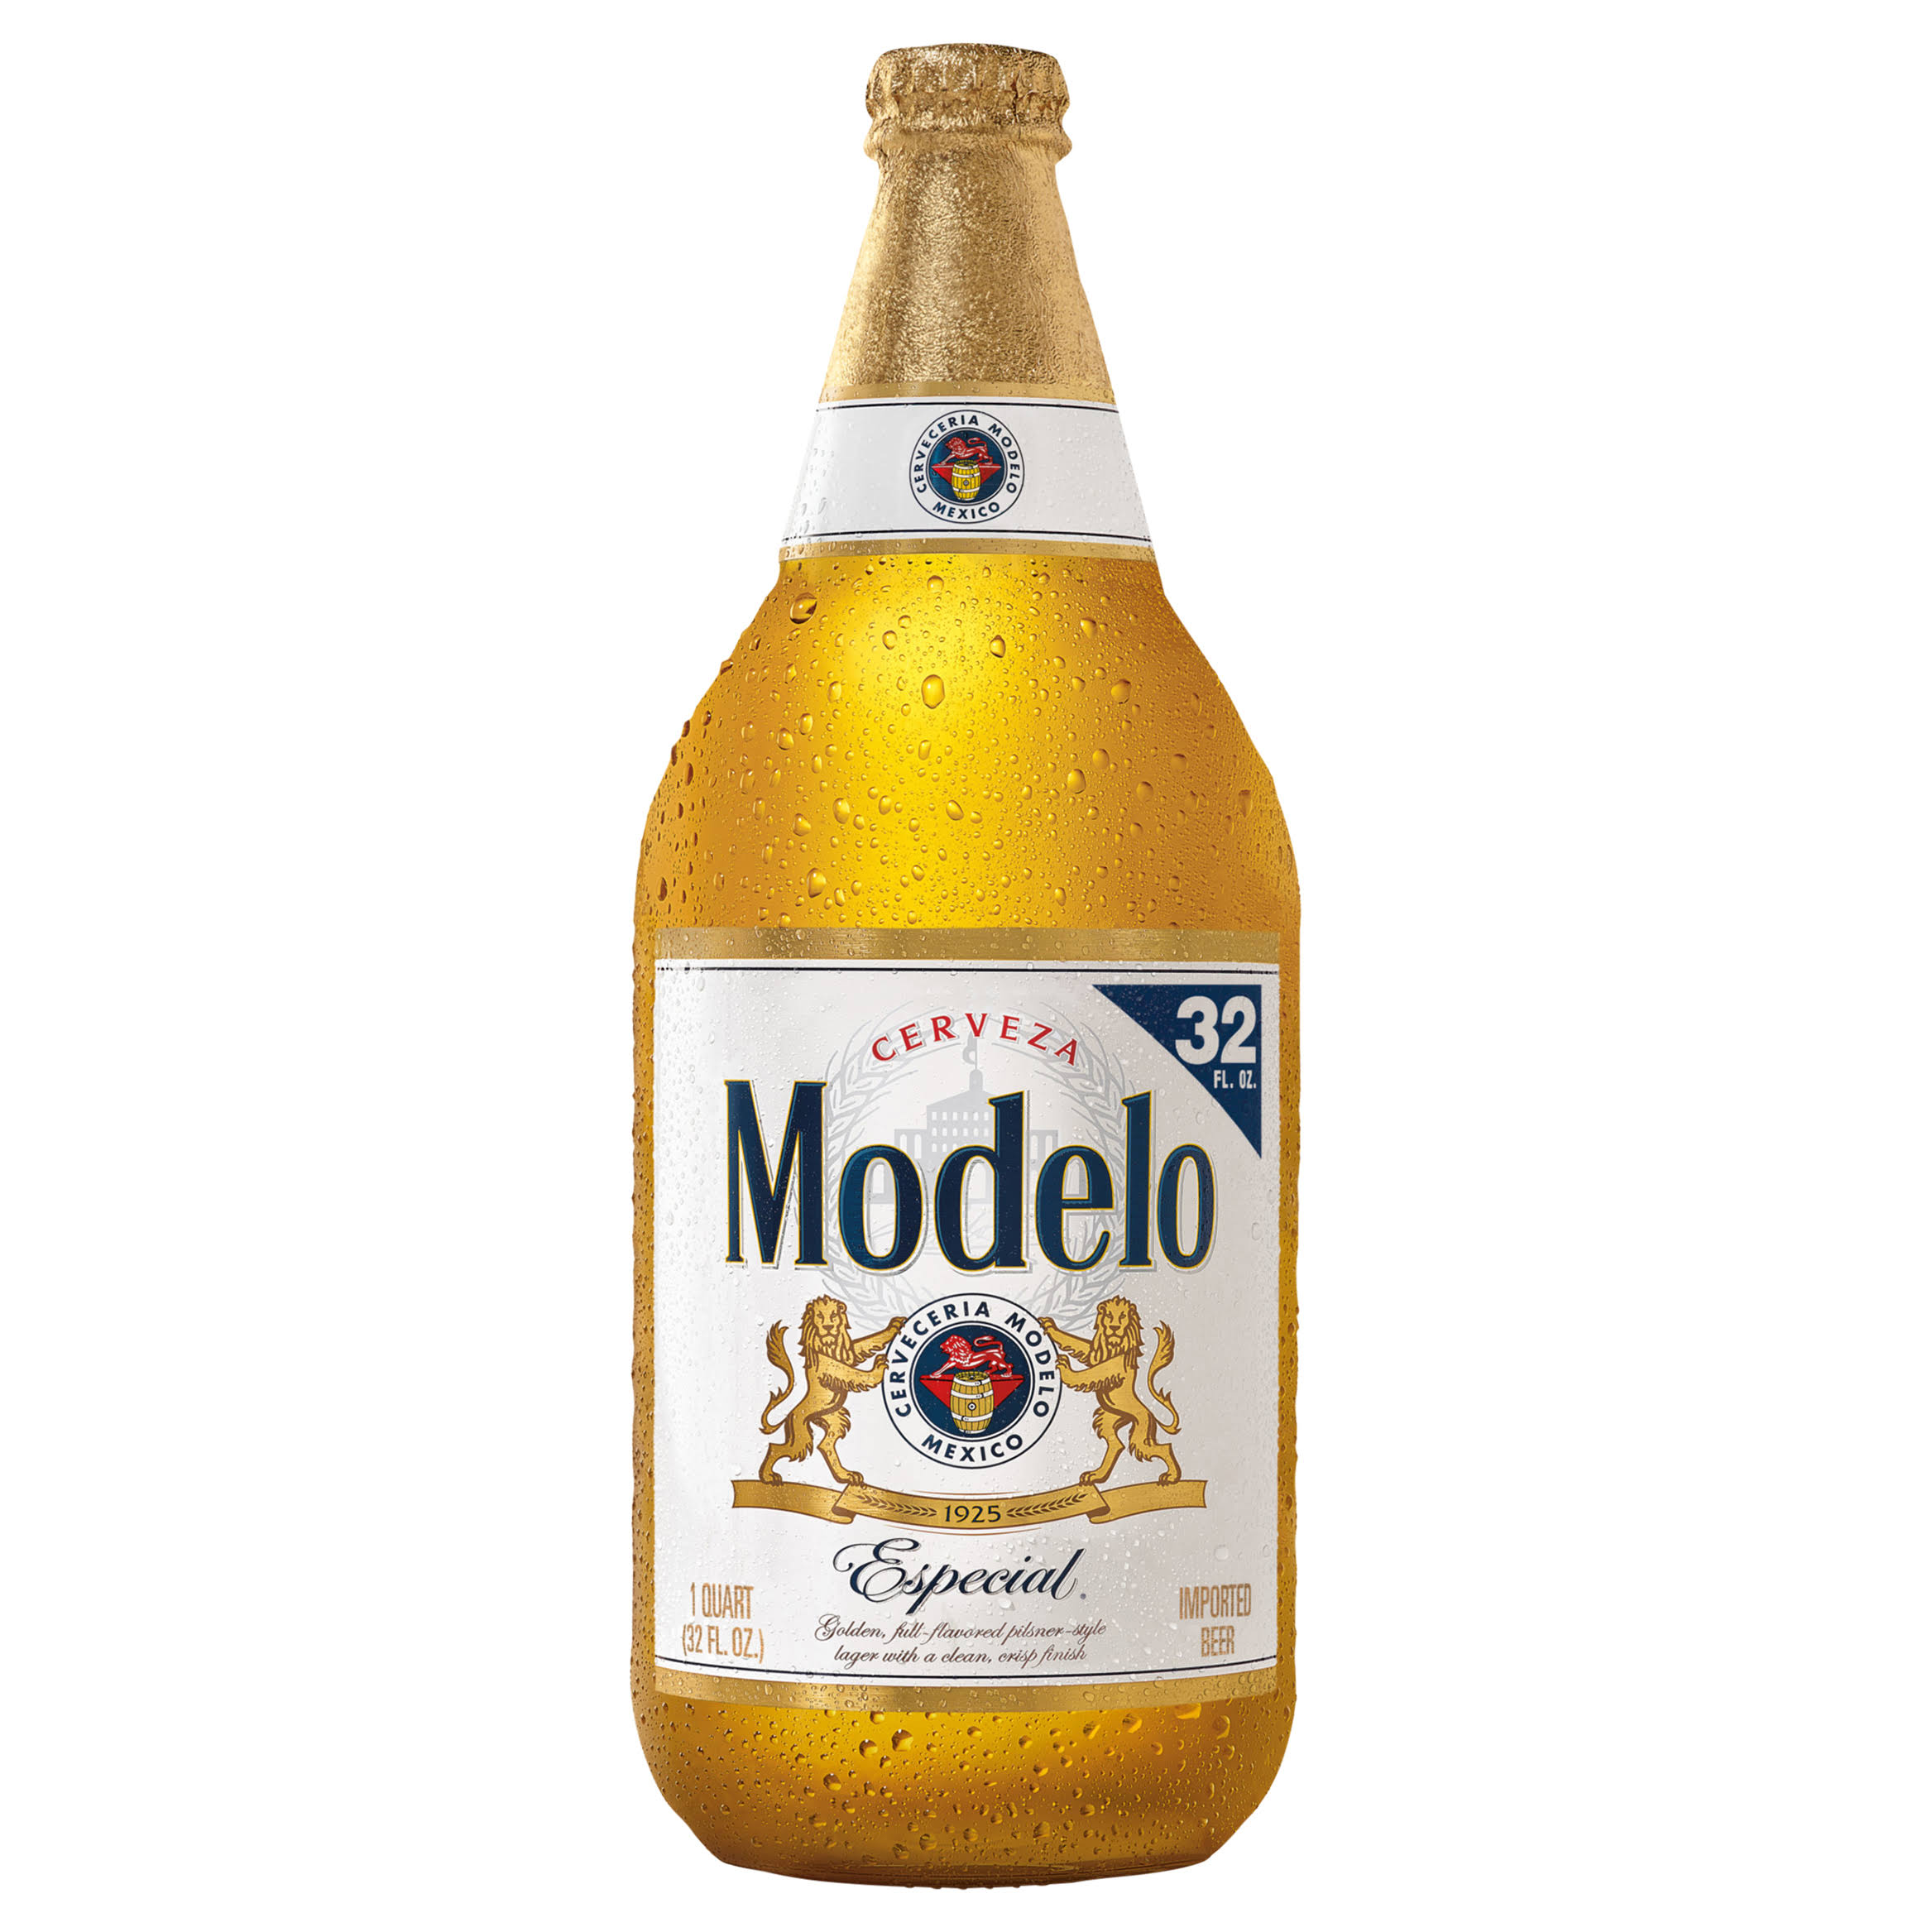 Modelo Beer, Imported, Especial - 1 quart